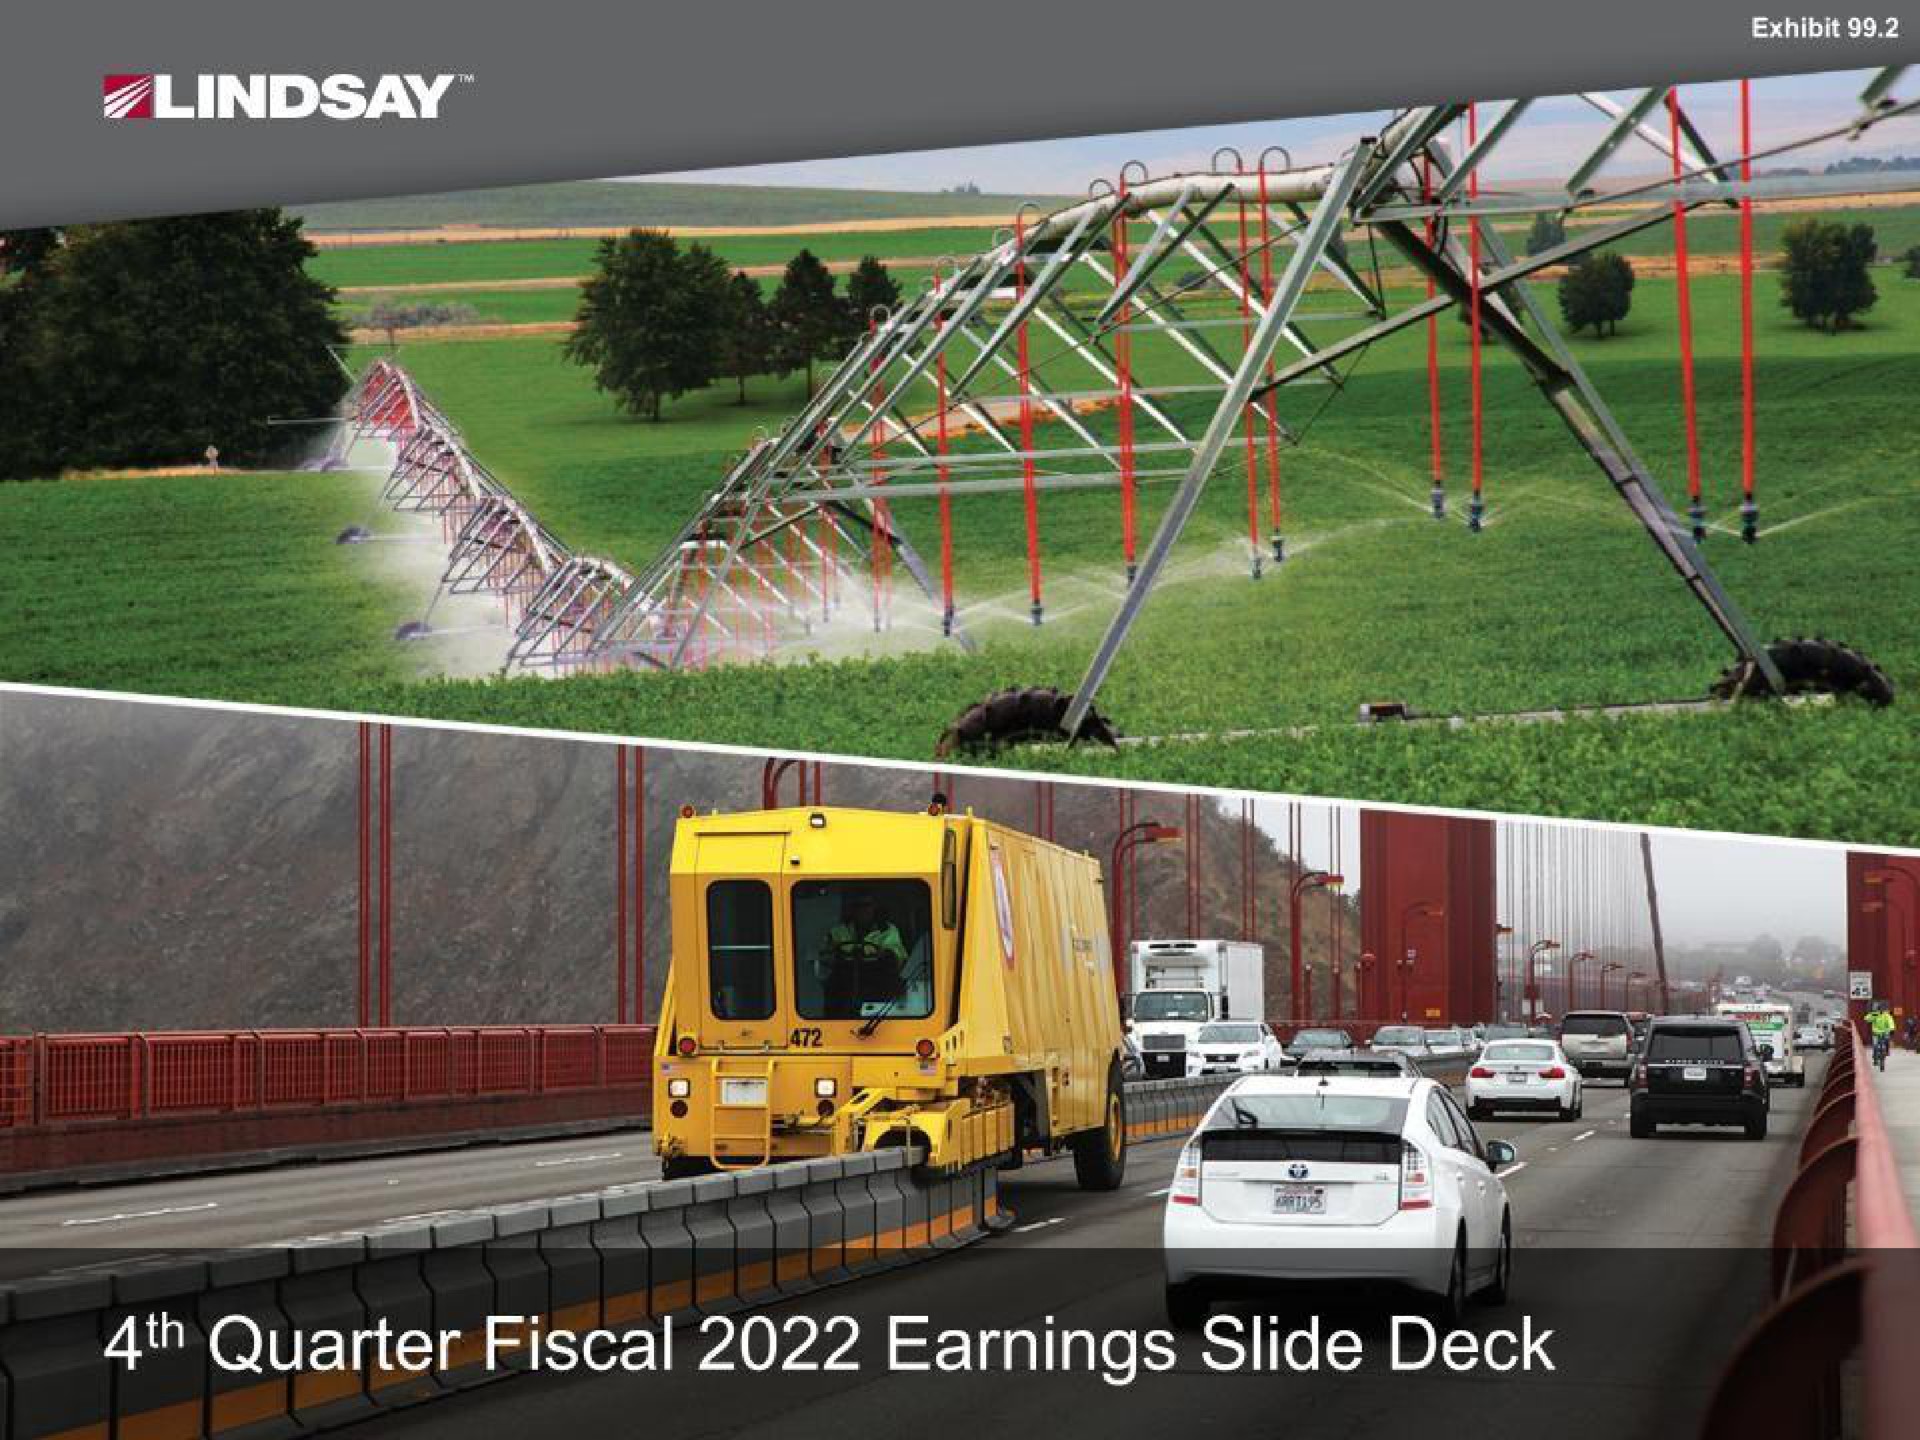 quarter fiscal earnings slide deck | Lindsay Corporation